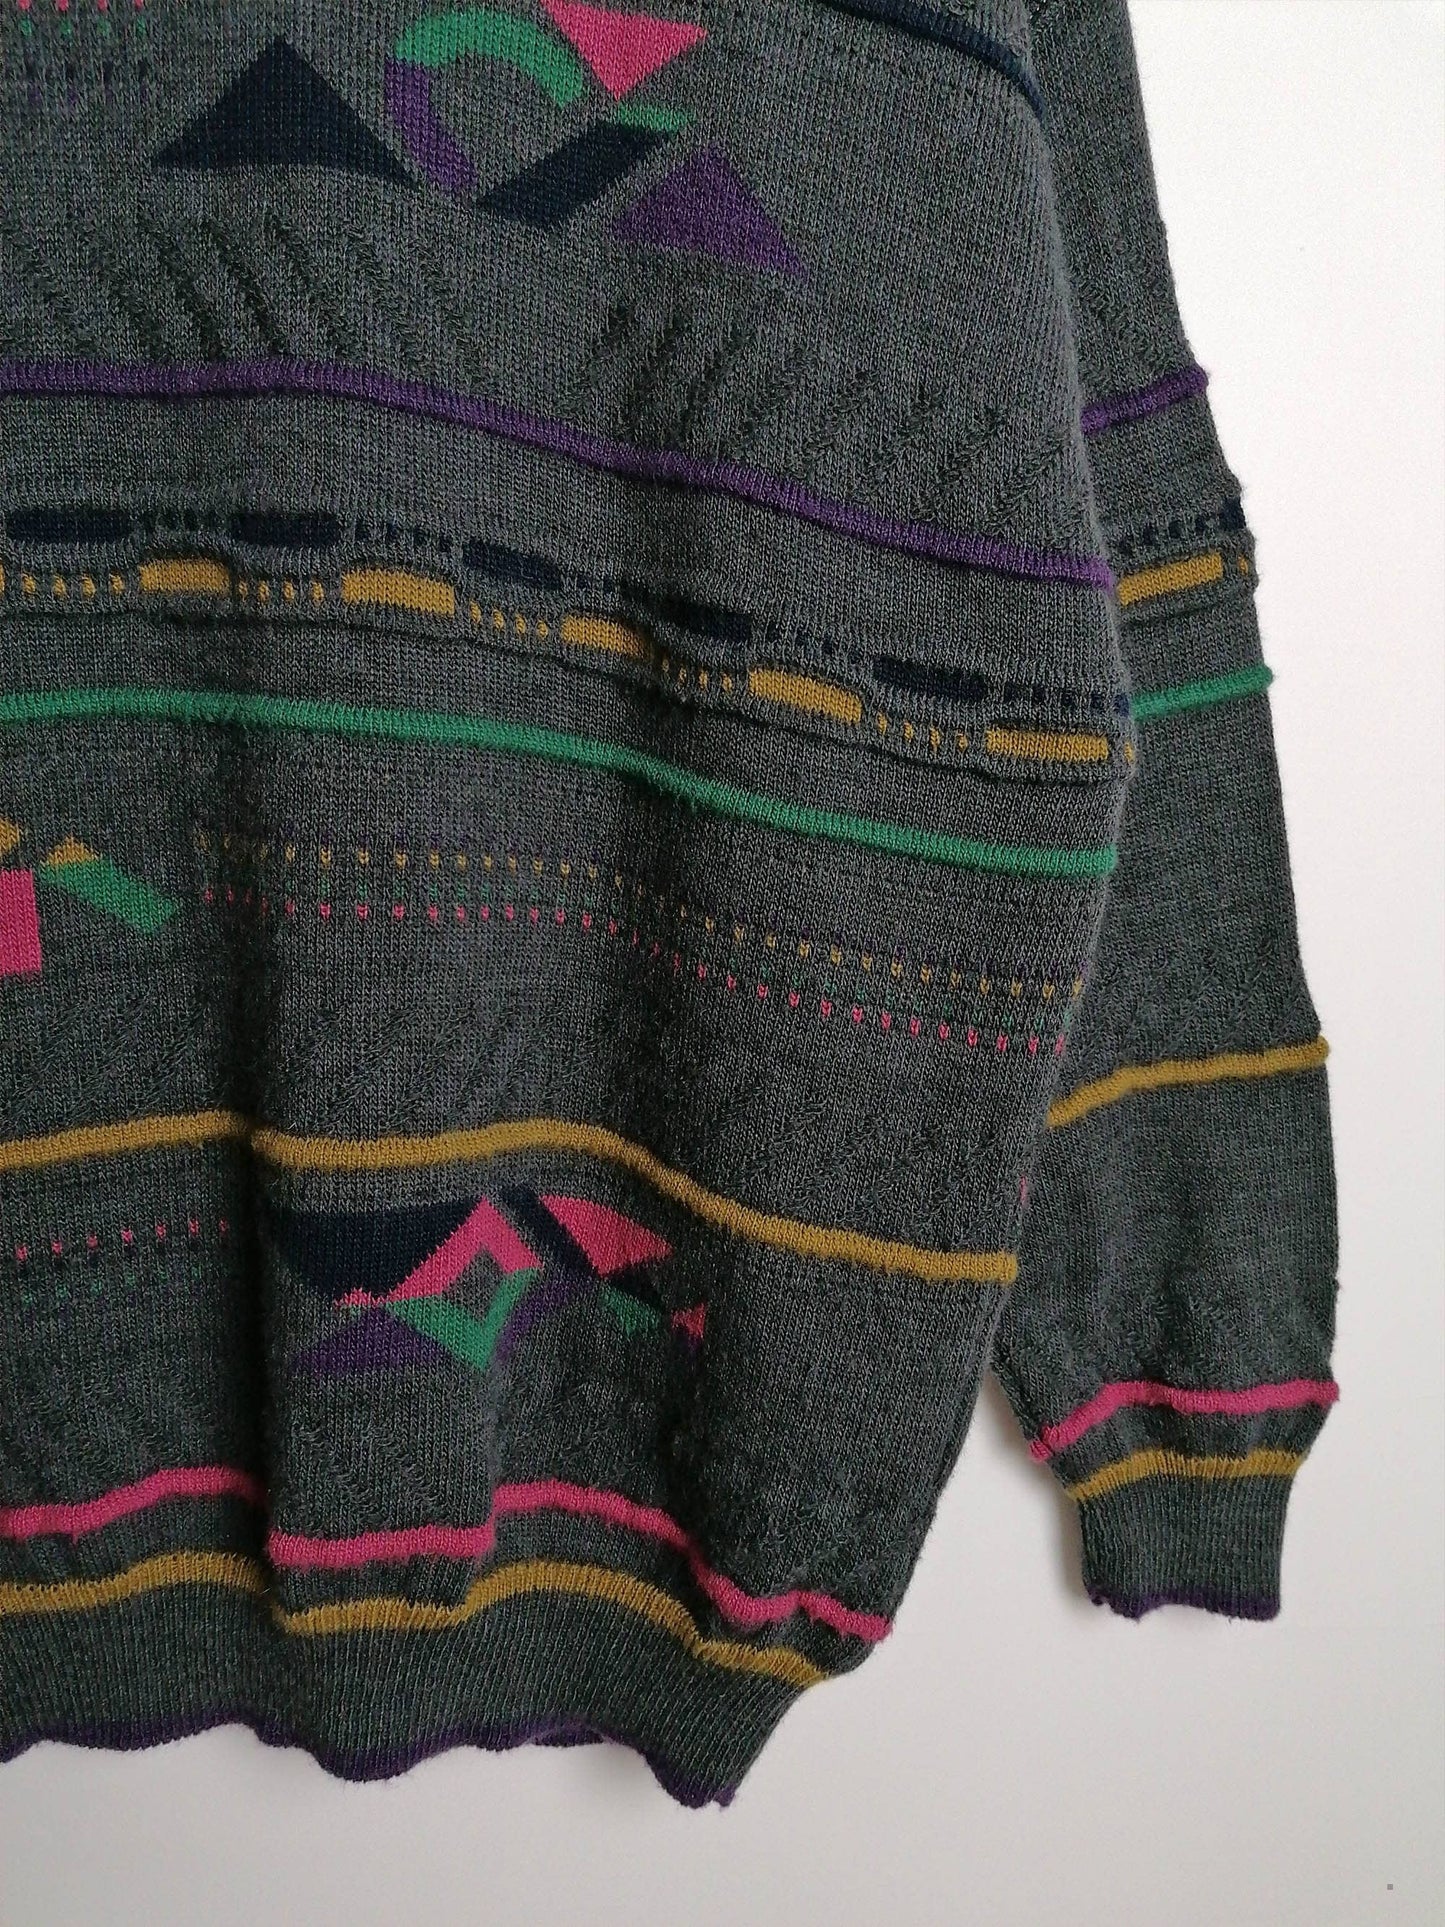 BOSCH Textil Retro Pattern Unisex Grandpa Sweater - size M-L / 52